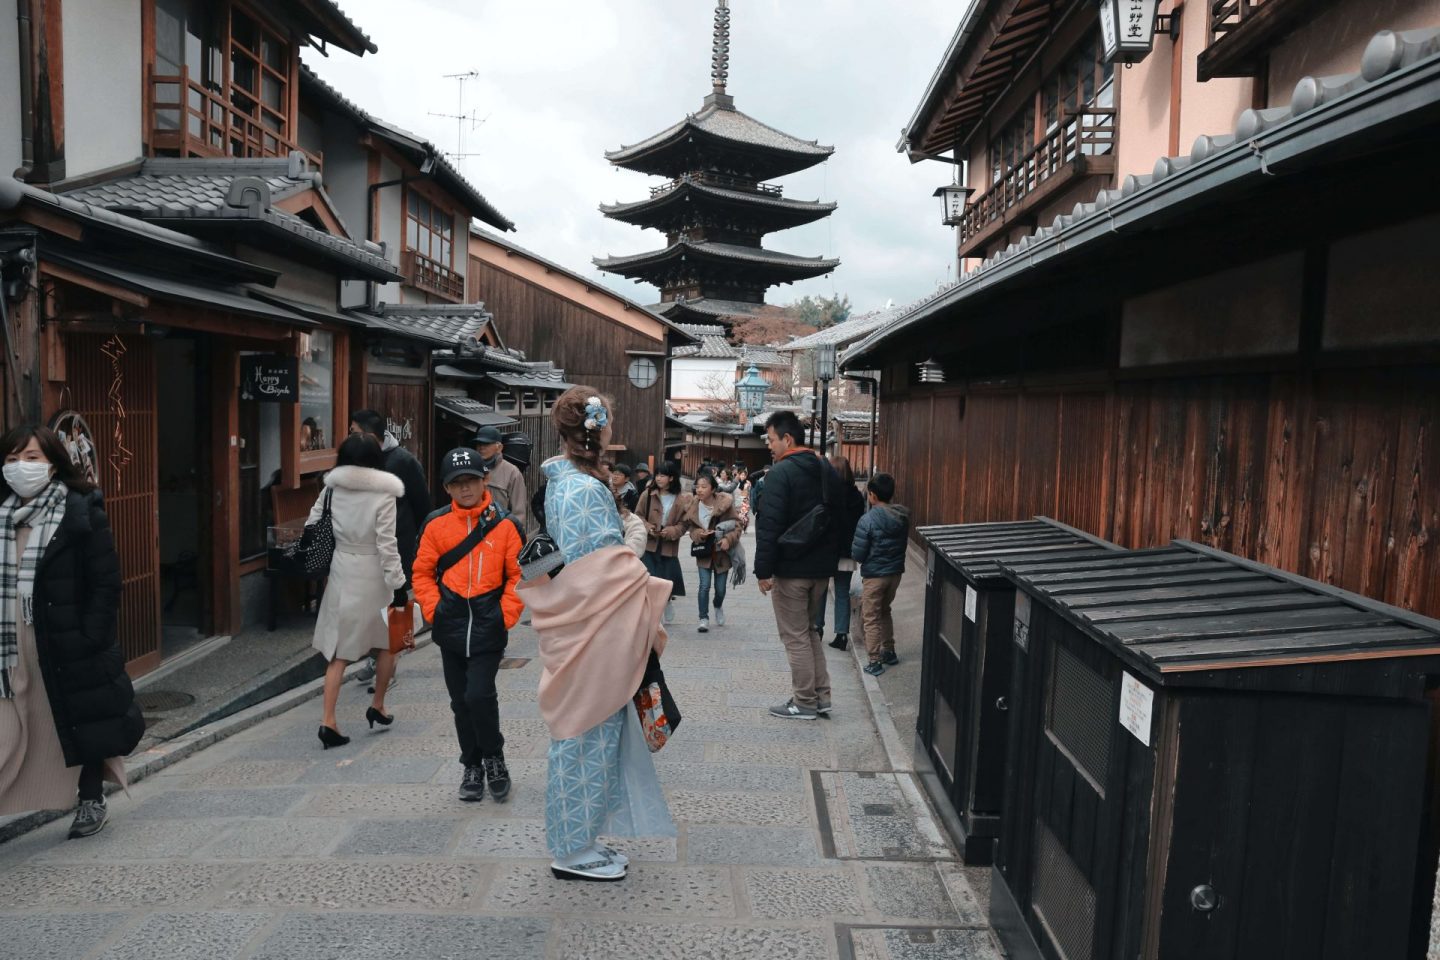 kimono rental near toji temple